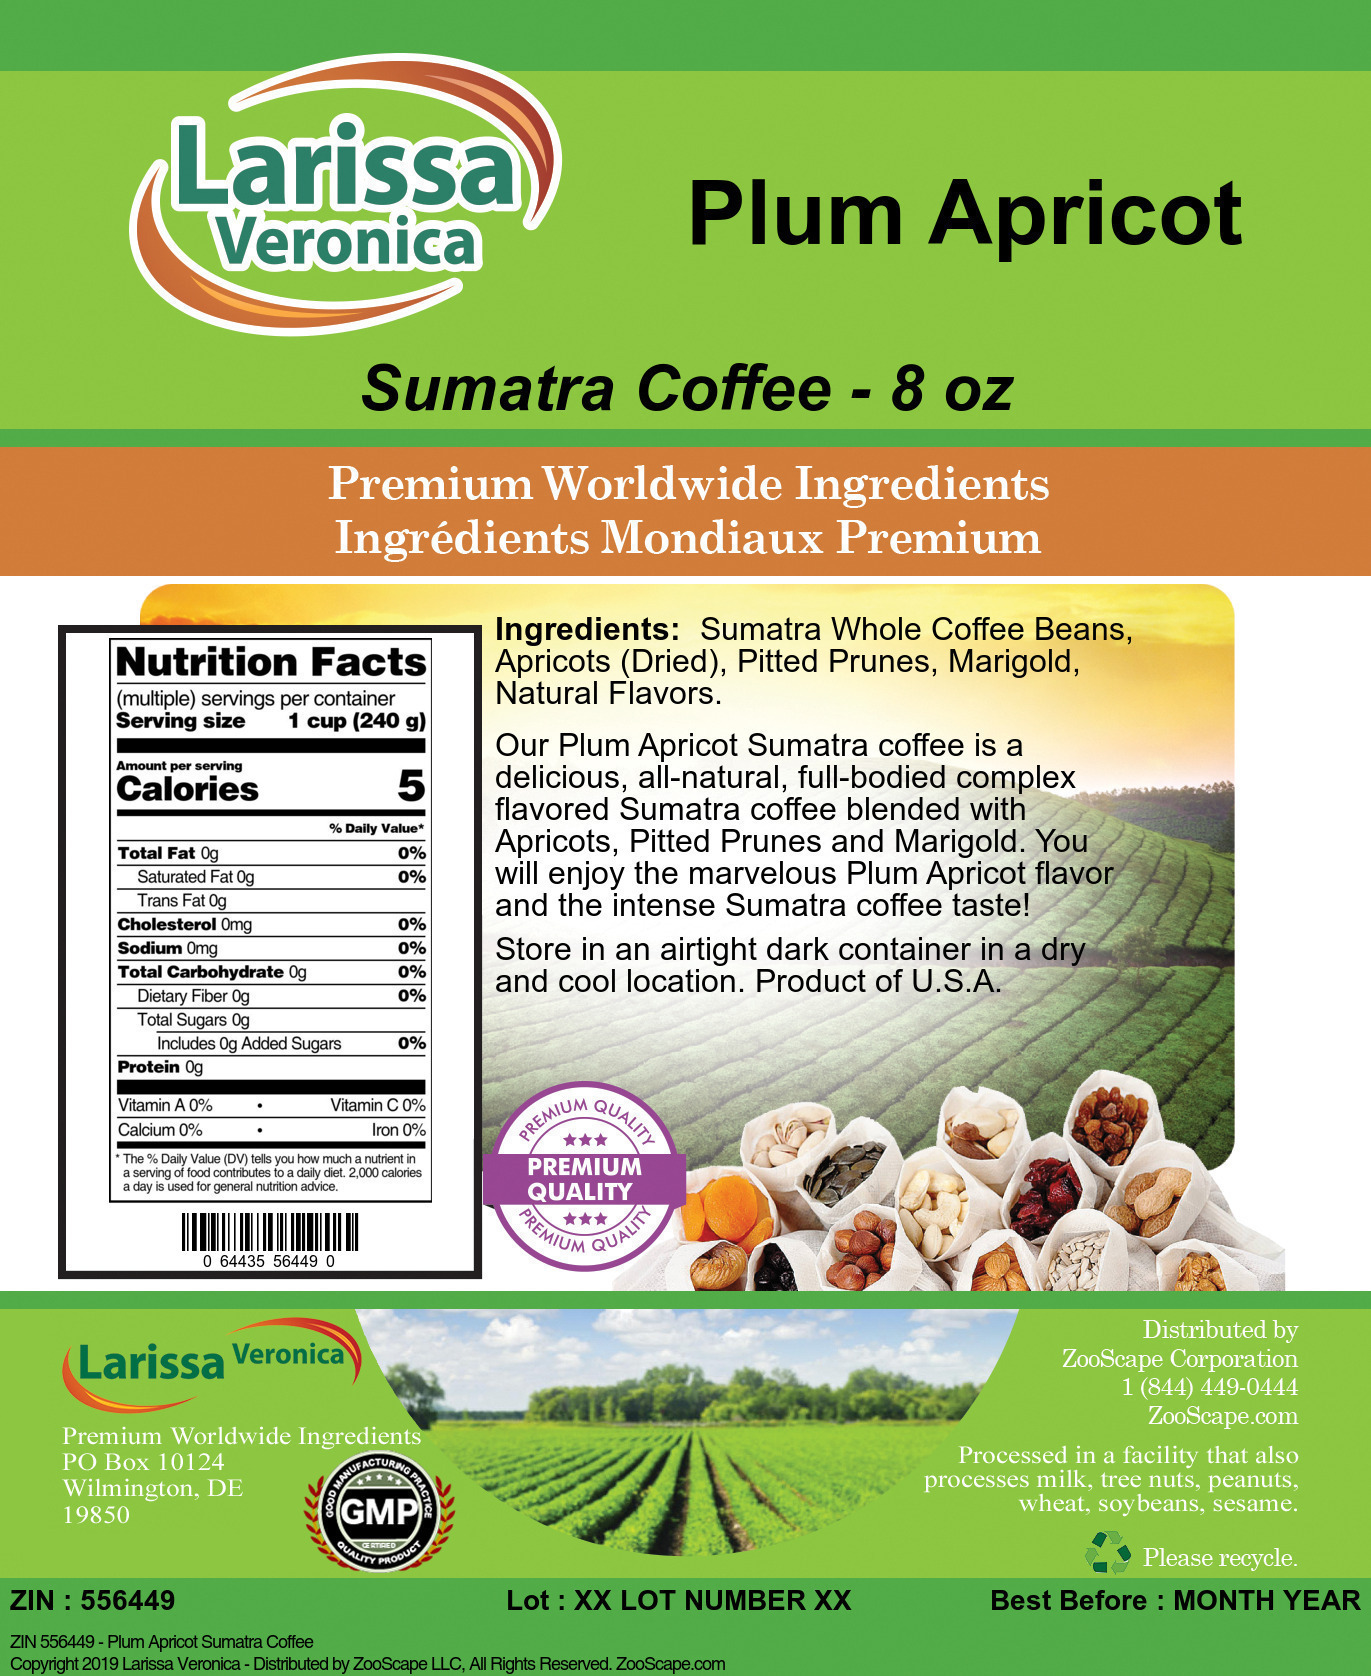 Plum Apricot Sumatra Coffee - Label